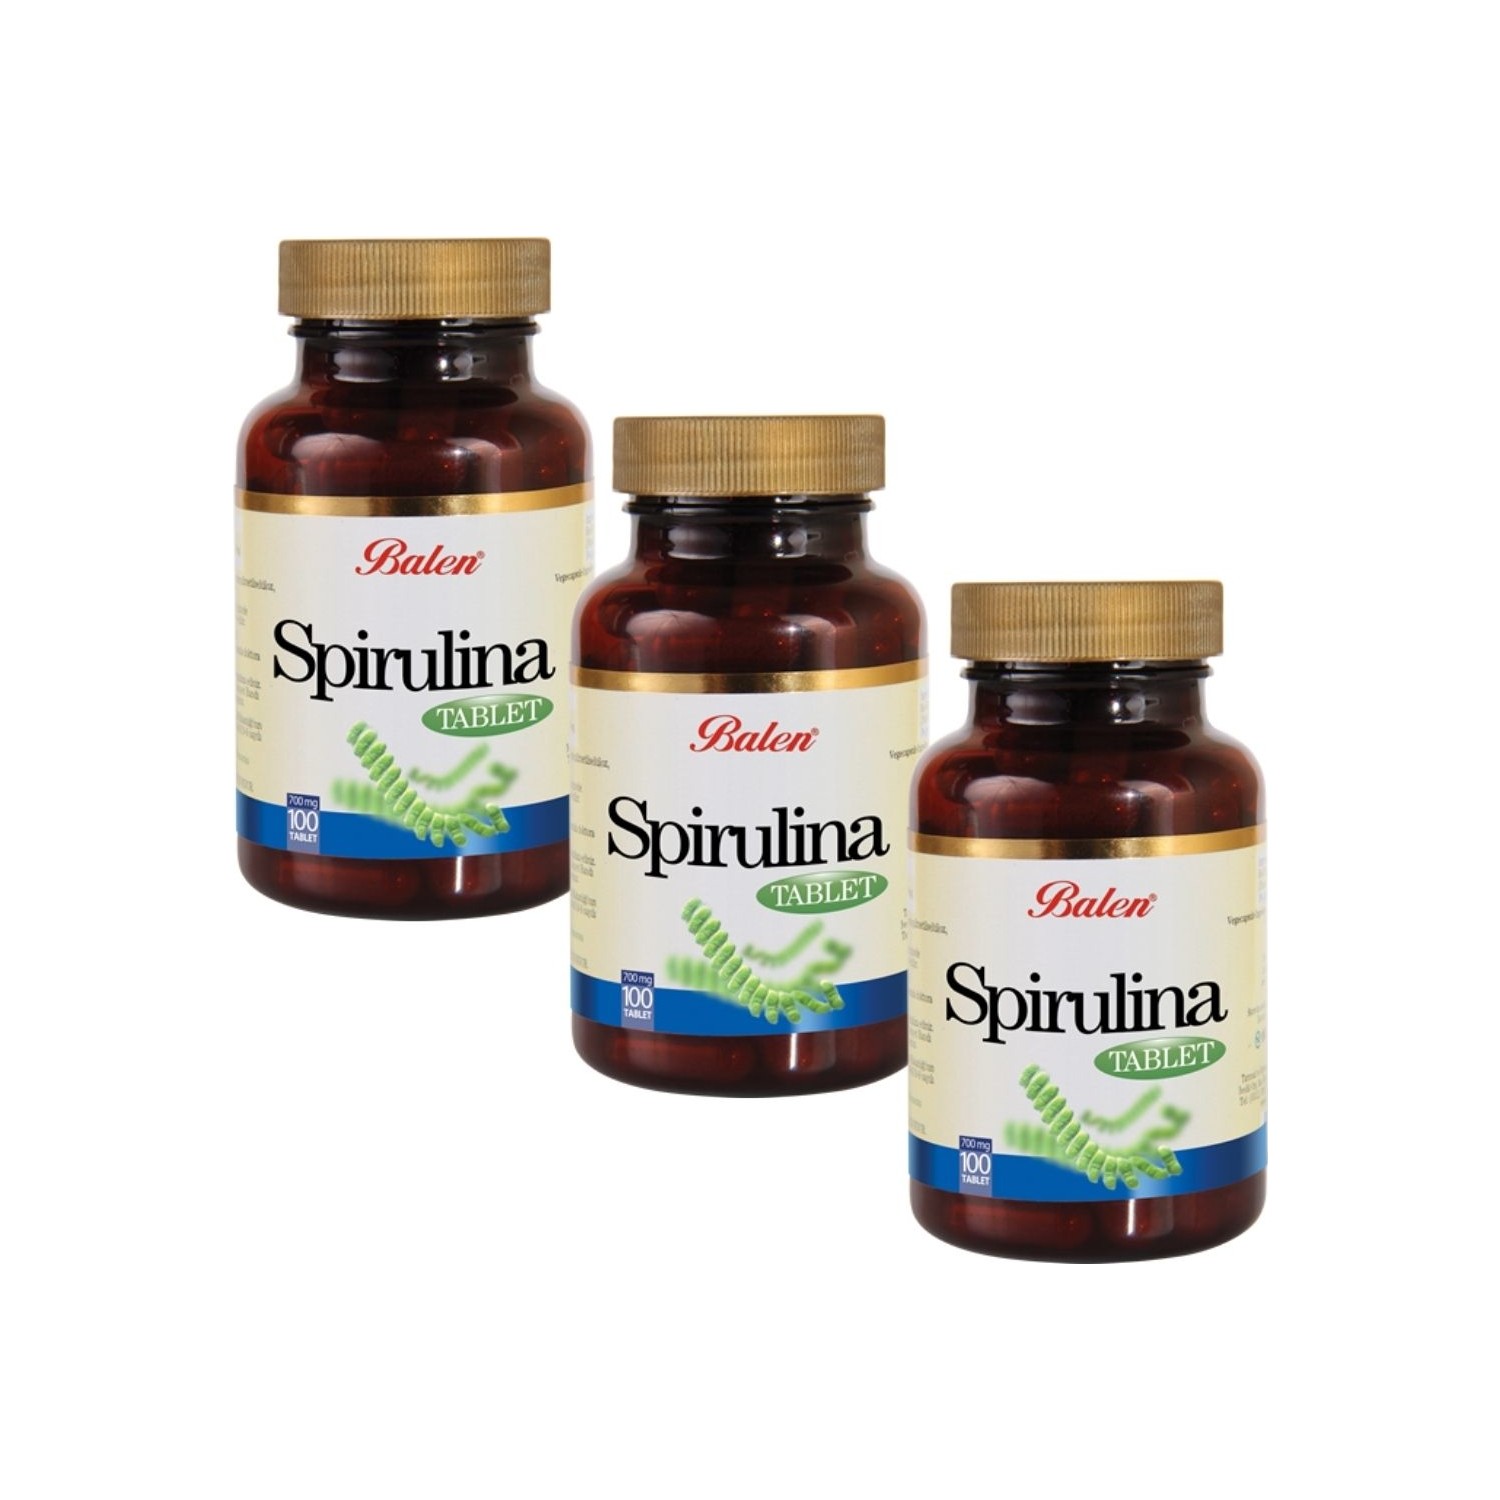 Пищевая добавка Balen Spirulina 740 мг, 3 упаковки по 100 таблеток пищевая добавка balen spirulina 740 мг 100 таблеток